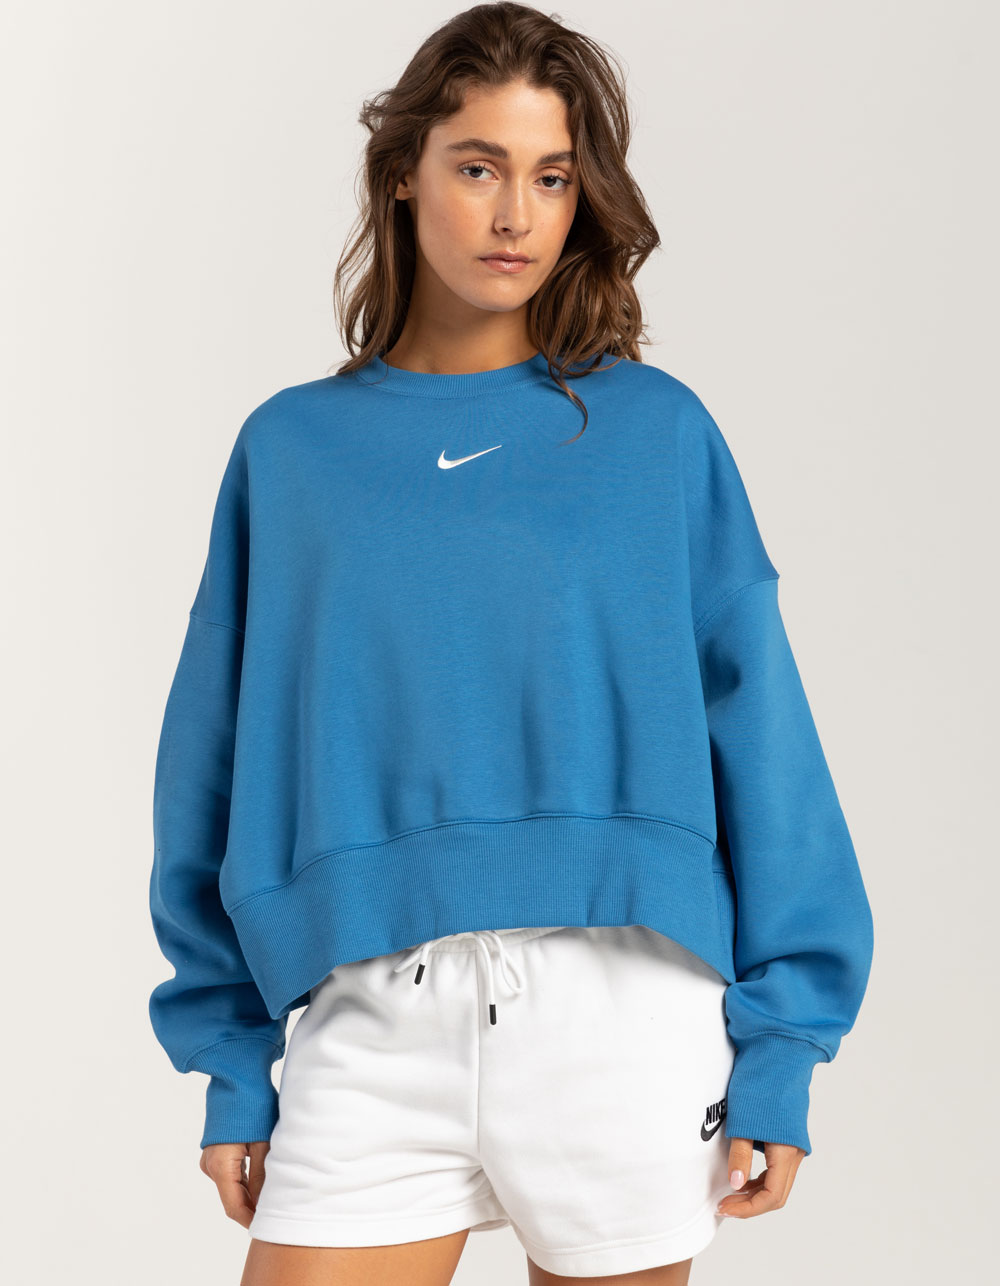 Women's Oversized Sweatshirts & Hoodies